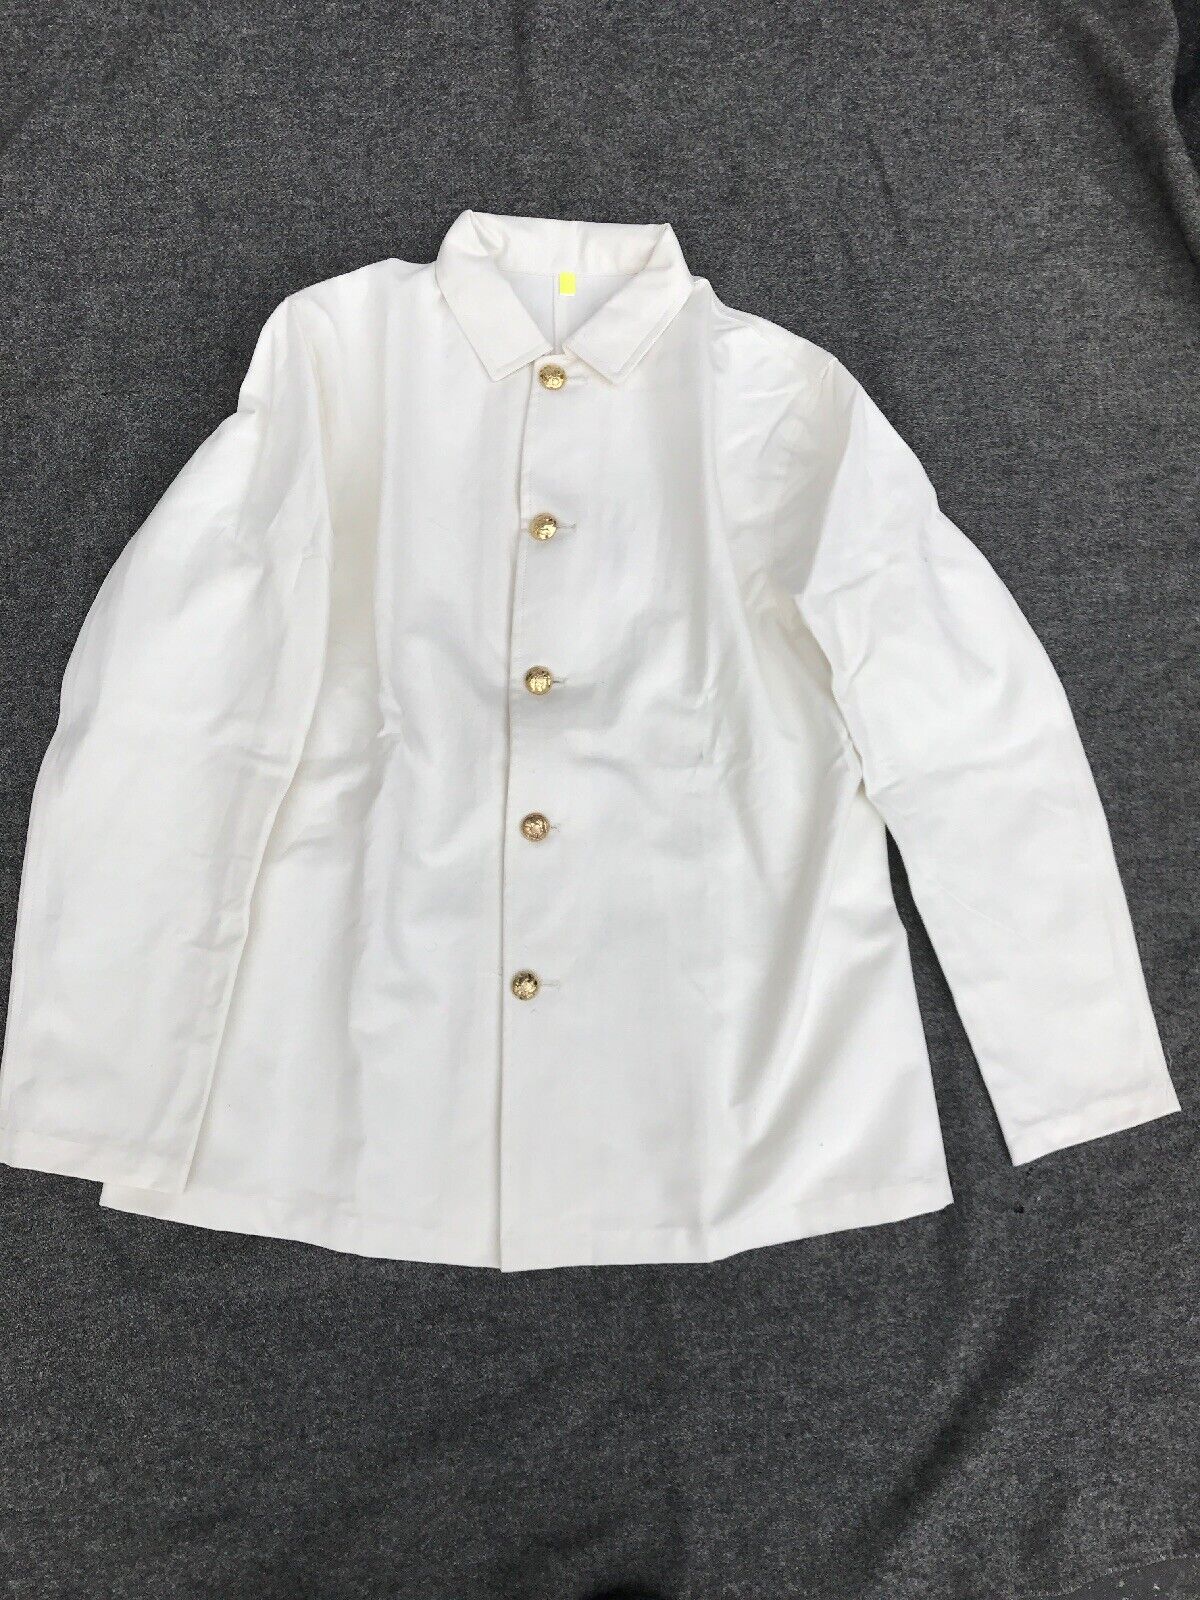 Reproduction M1889 White Duck Blouse Jacket Size 48